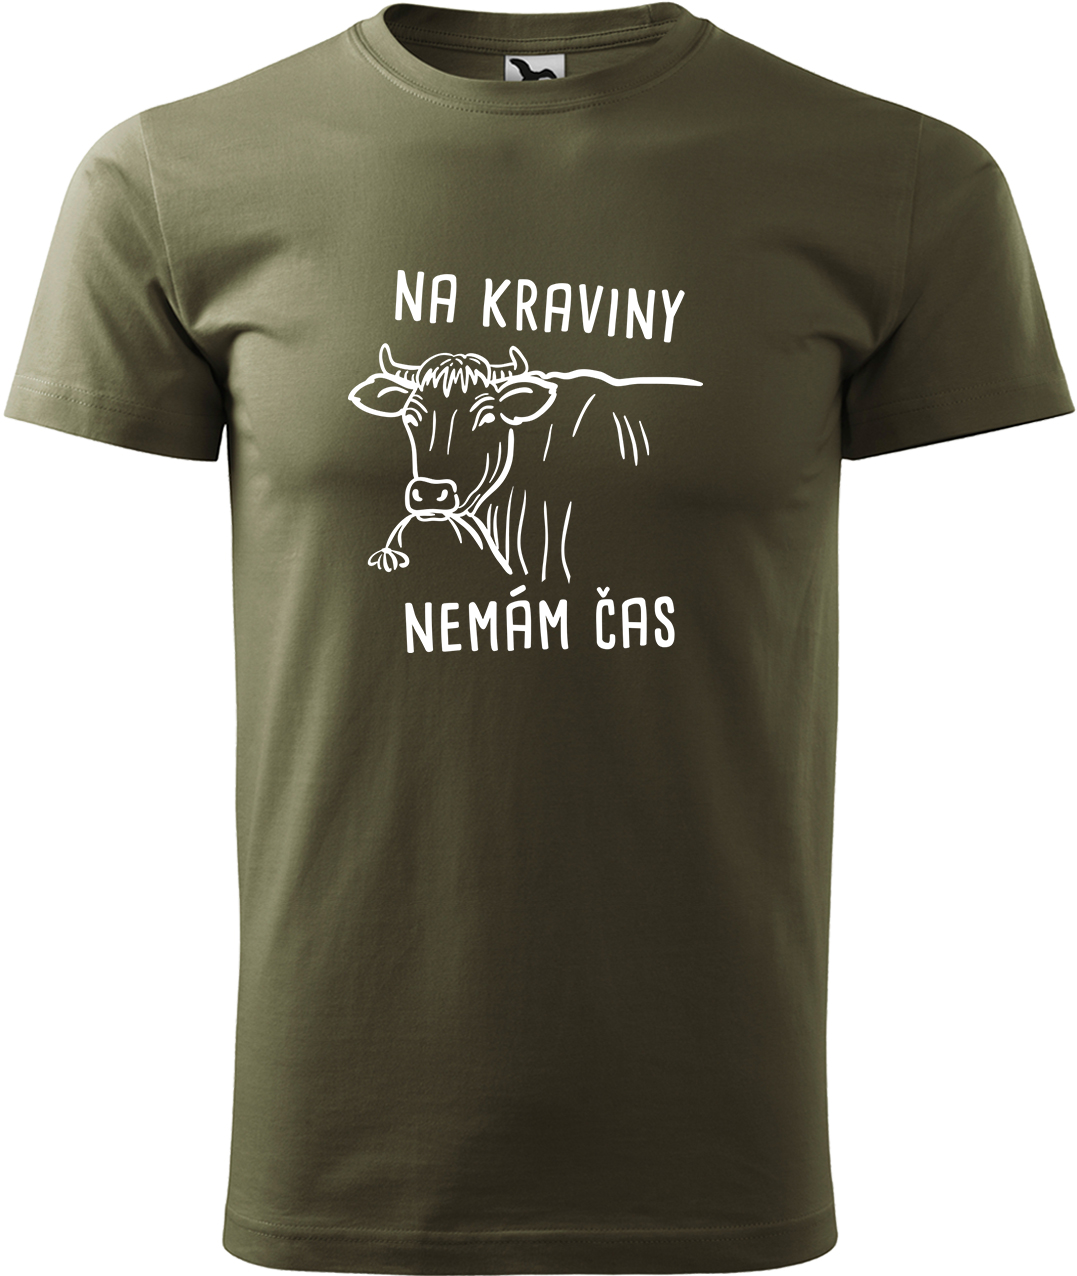 Pánské tričko s krávou - Na kraviny nemám čas Velikost: L, Barva: Military (69), Střih: pánský